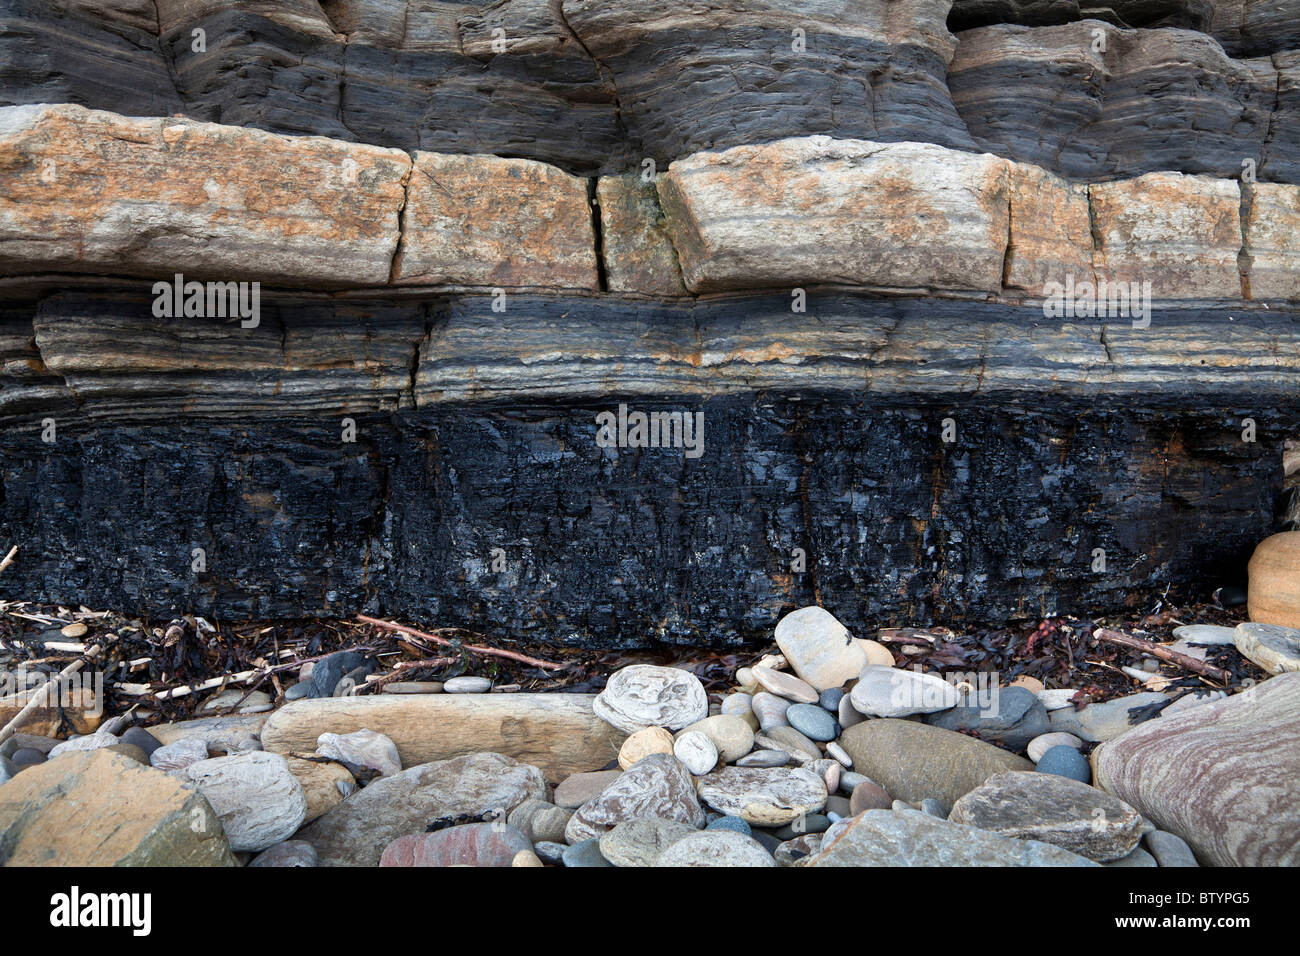 Coal deposits on beach cliffs at Seaton Sluice, Tyne and Wear Stock Photo